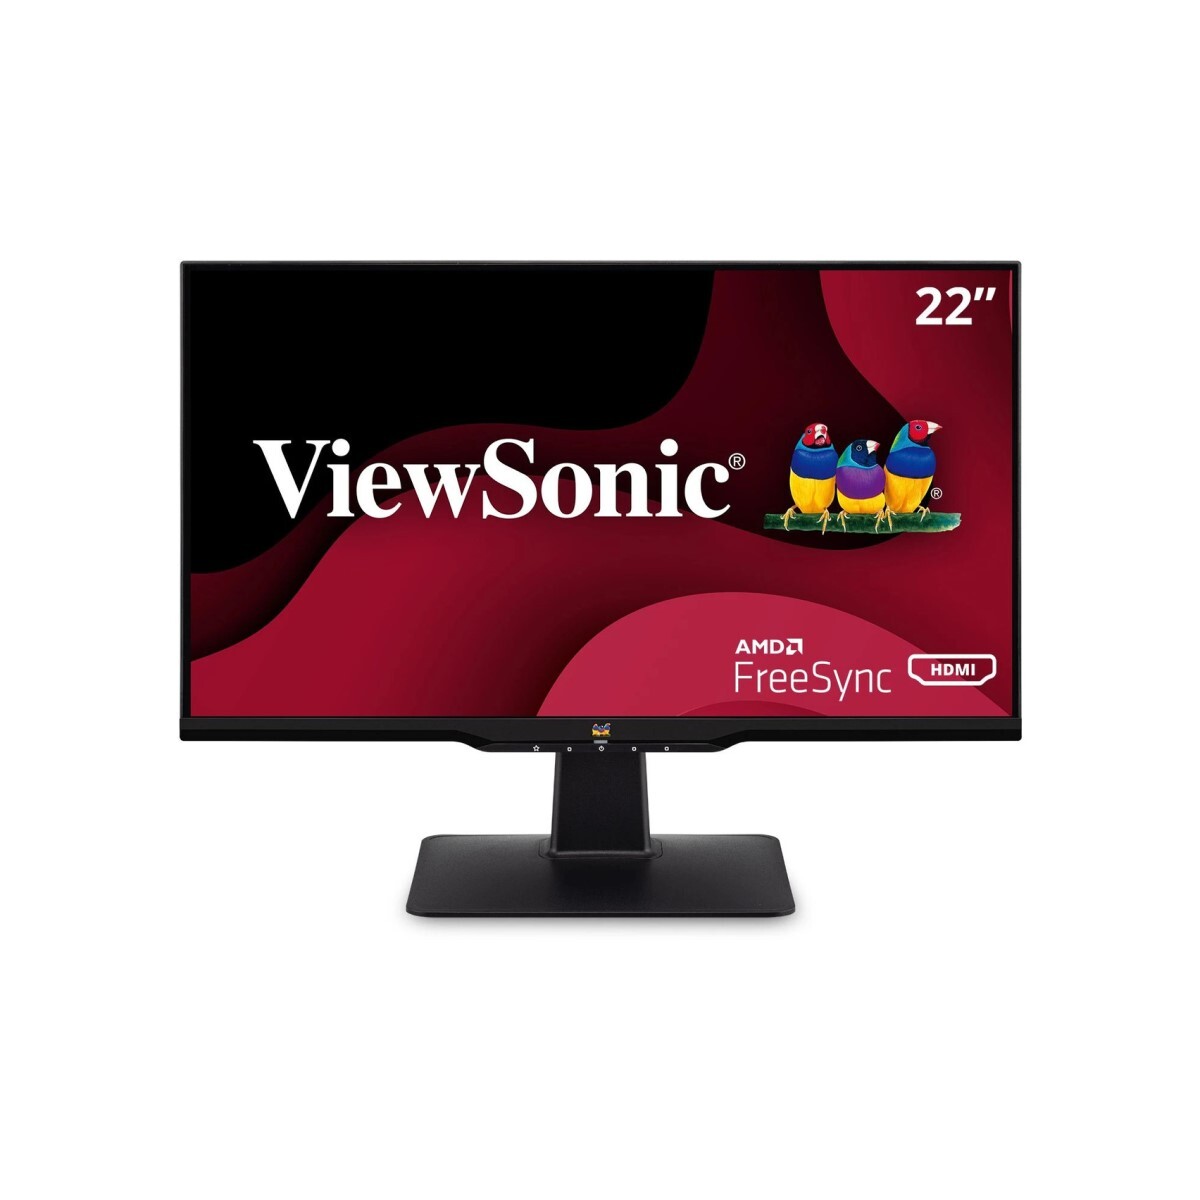 Monitor ViewSonic 22" Full HD Led Backlit Display VA2233-h - Black 